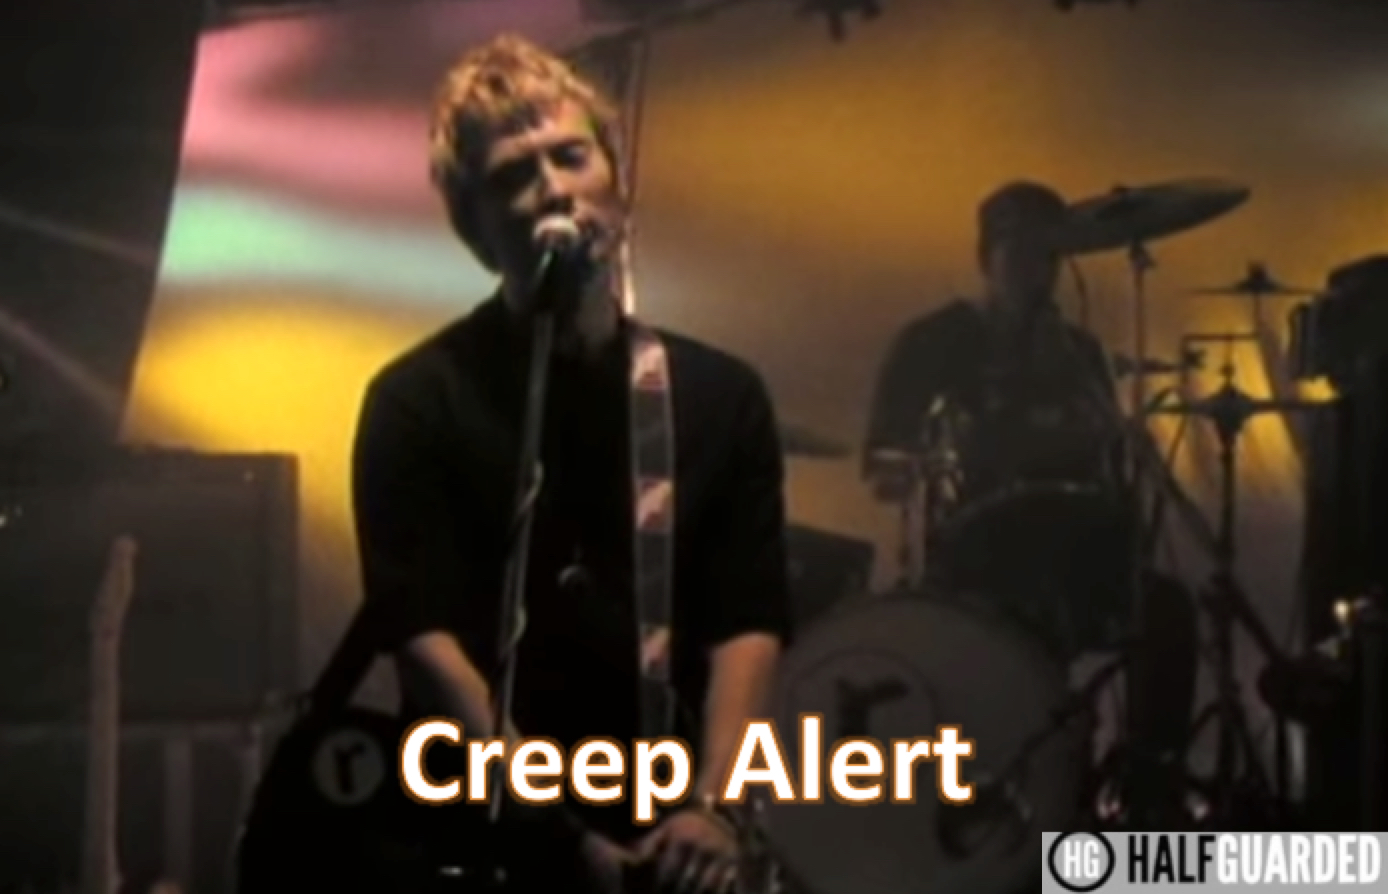 I'm a Creep by Radiohead Creep Alert iPhone App